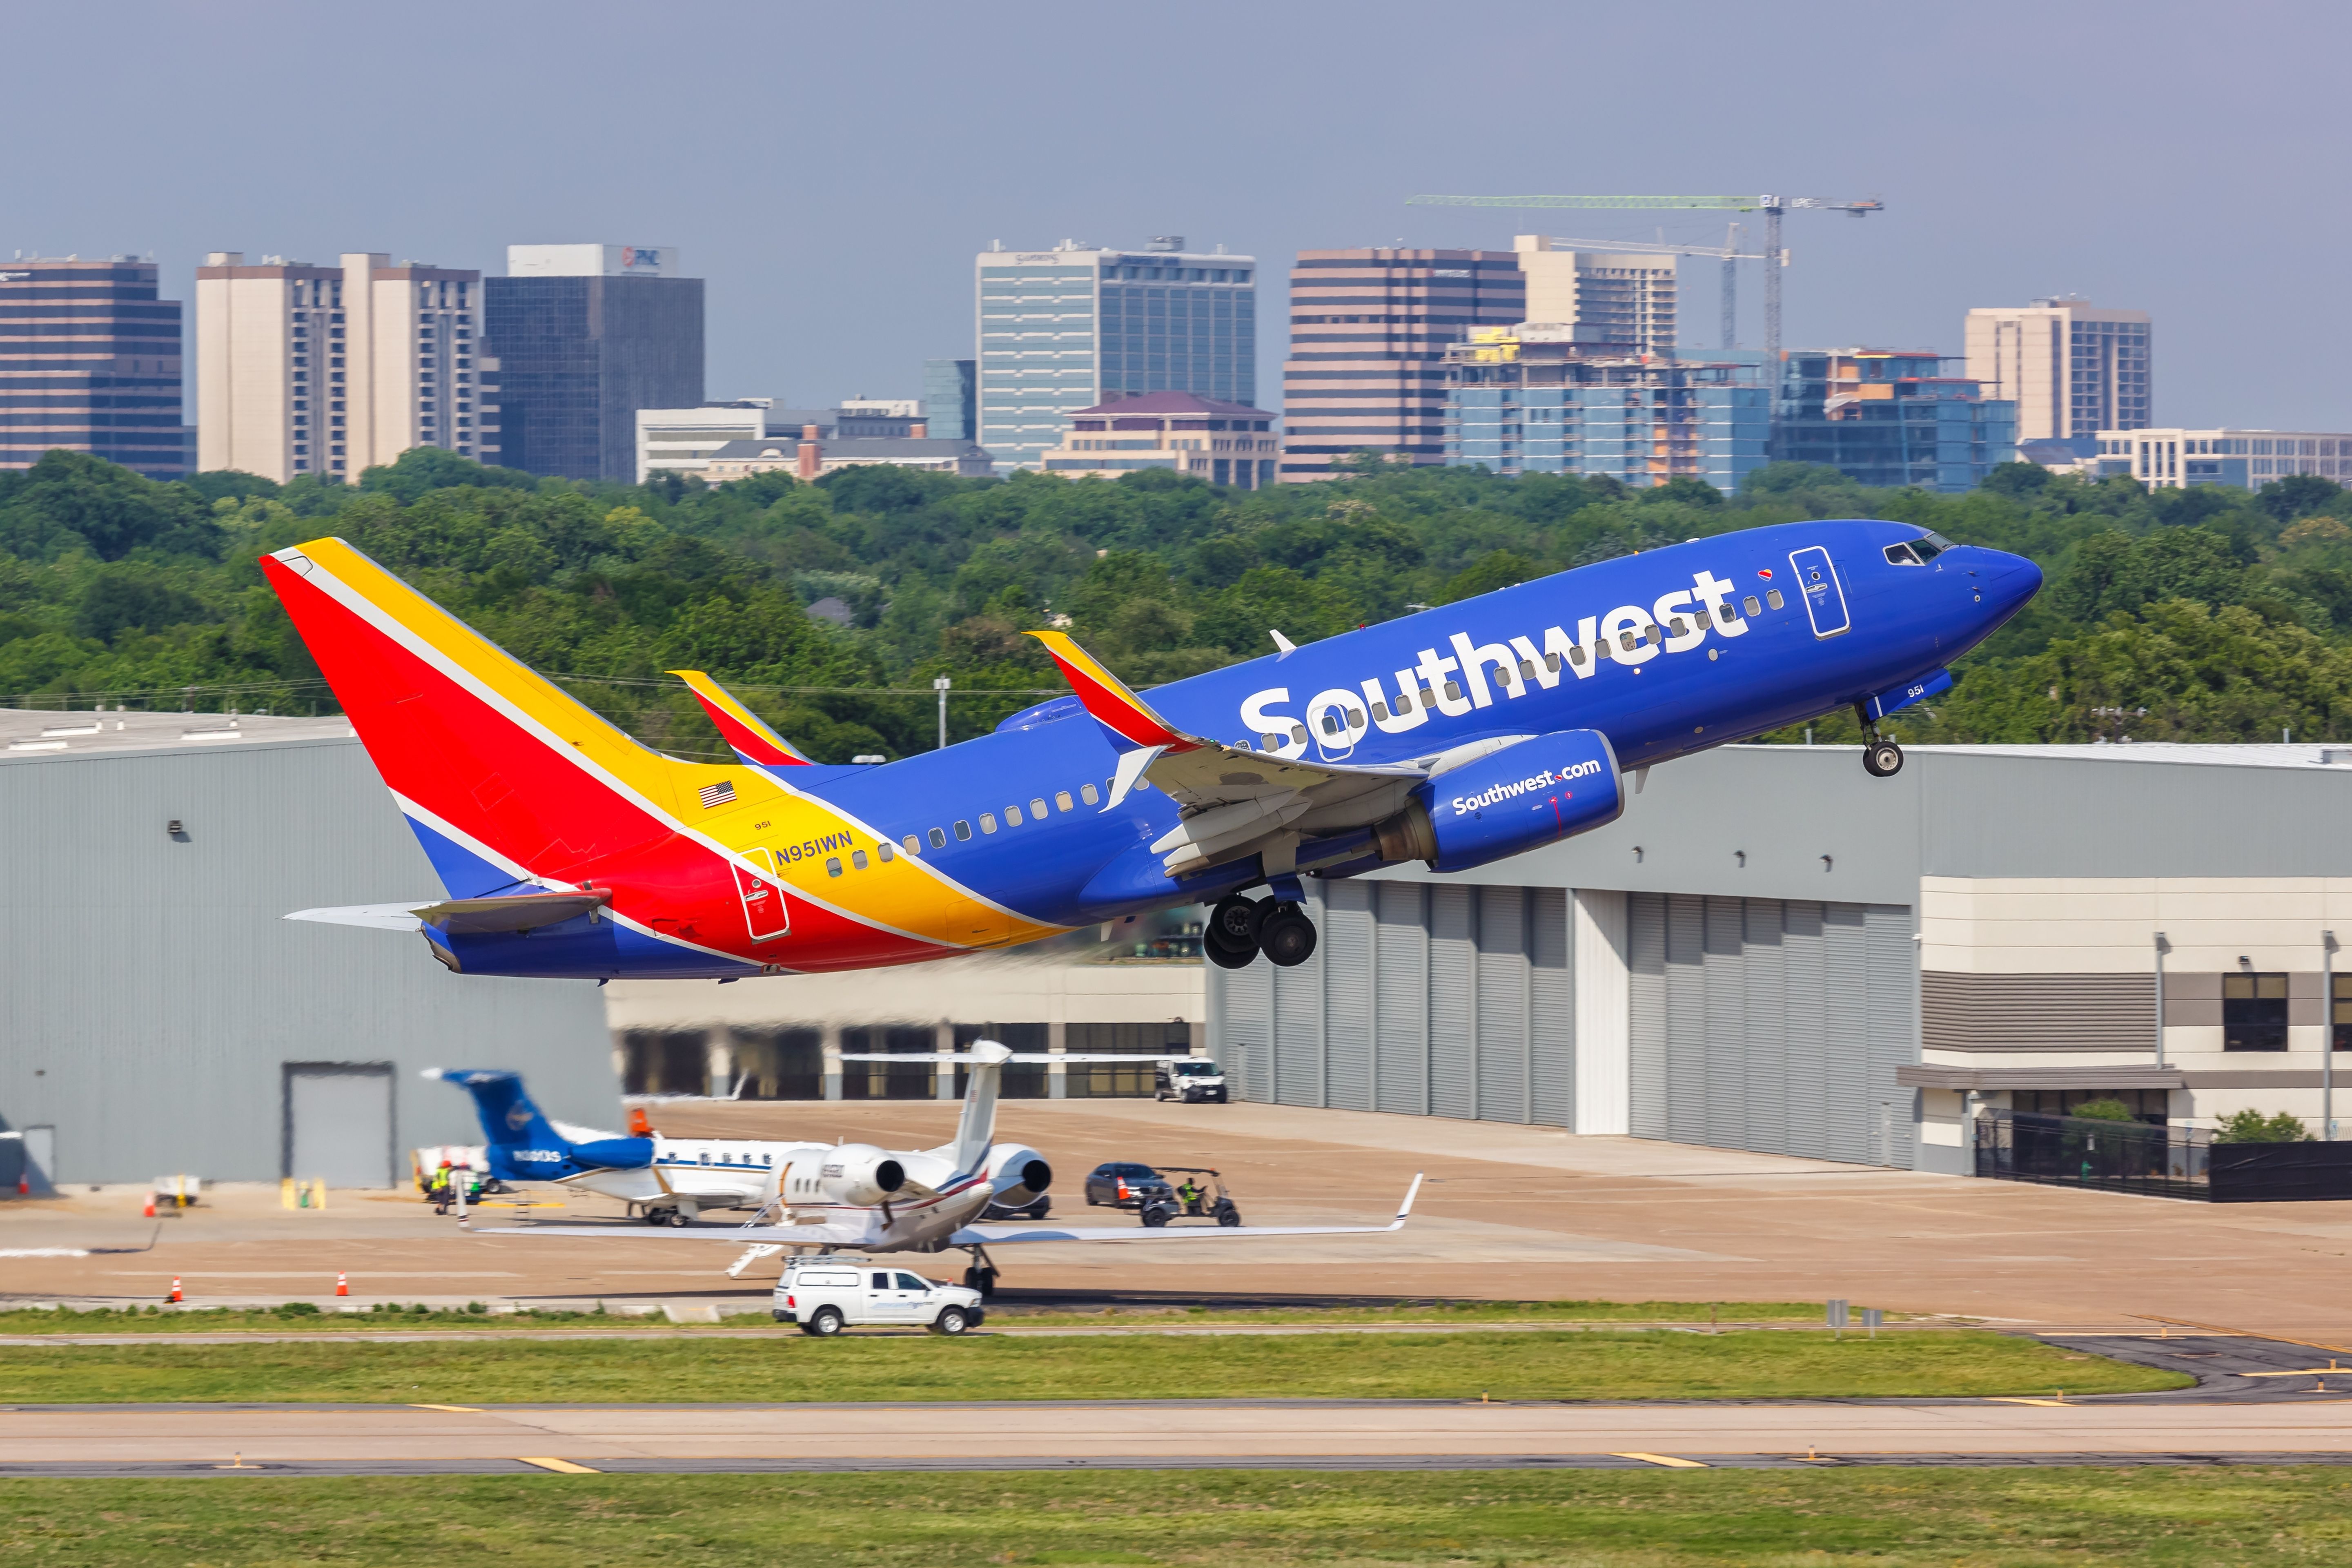 Southwest Boeing 737 Departing From Dallas Love Field